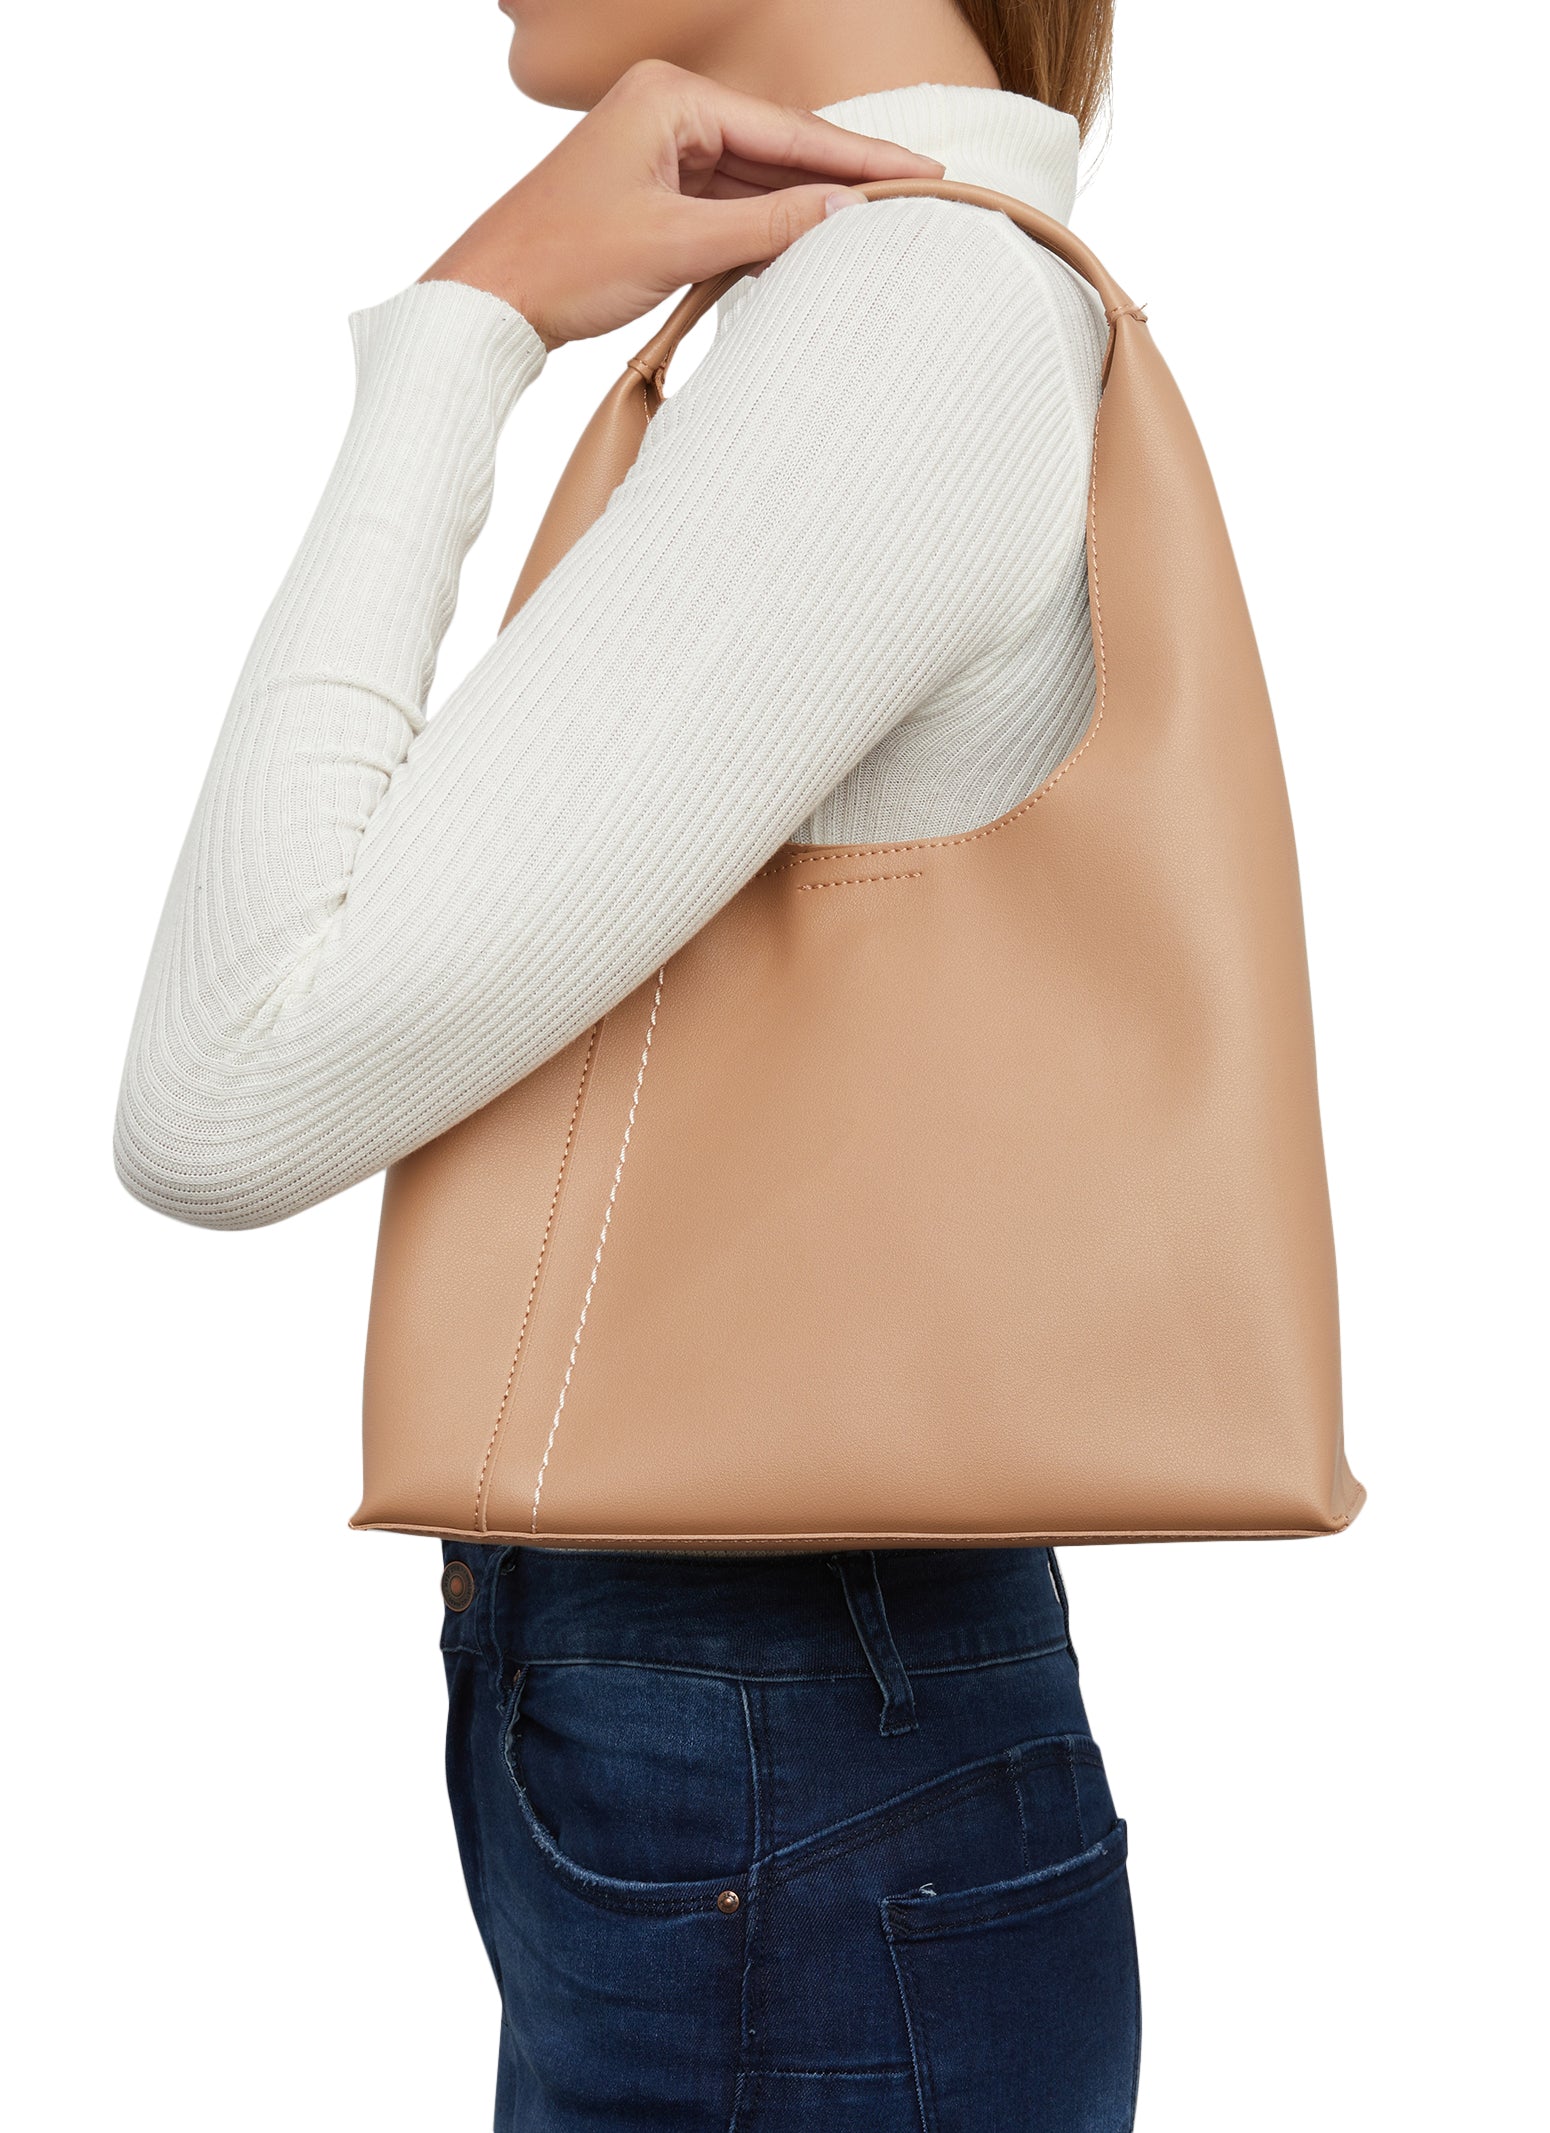 Women's Faux Leather Hobo Bag